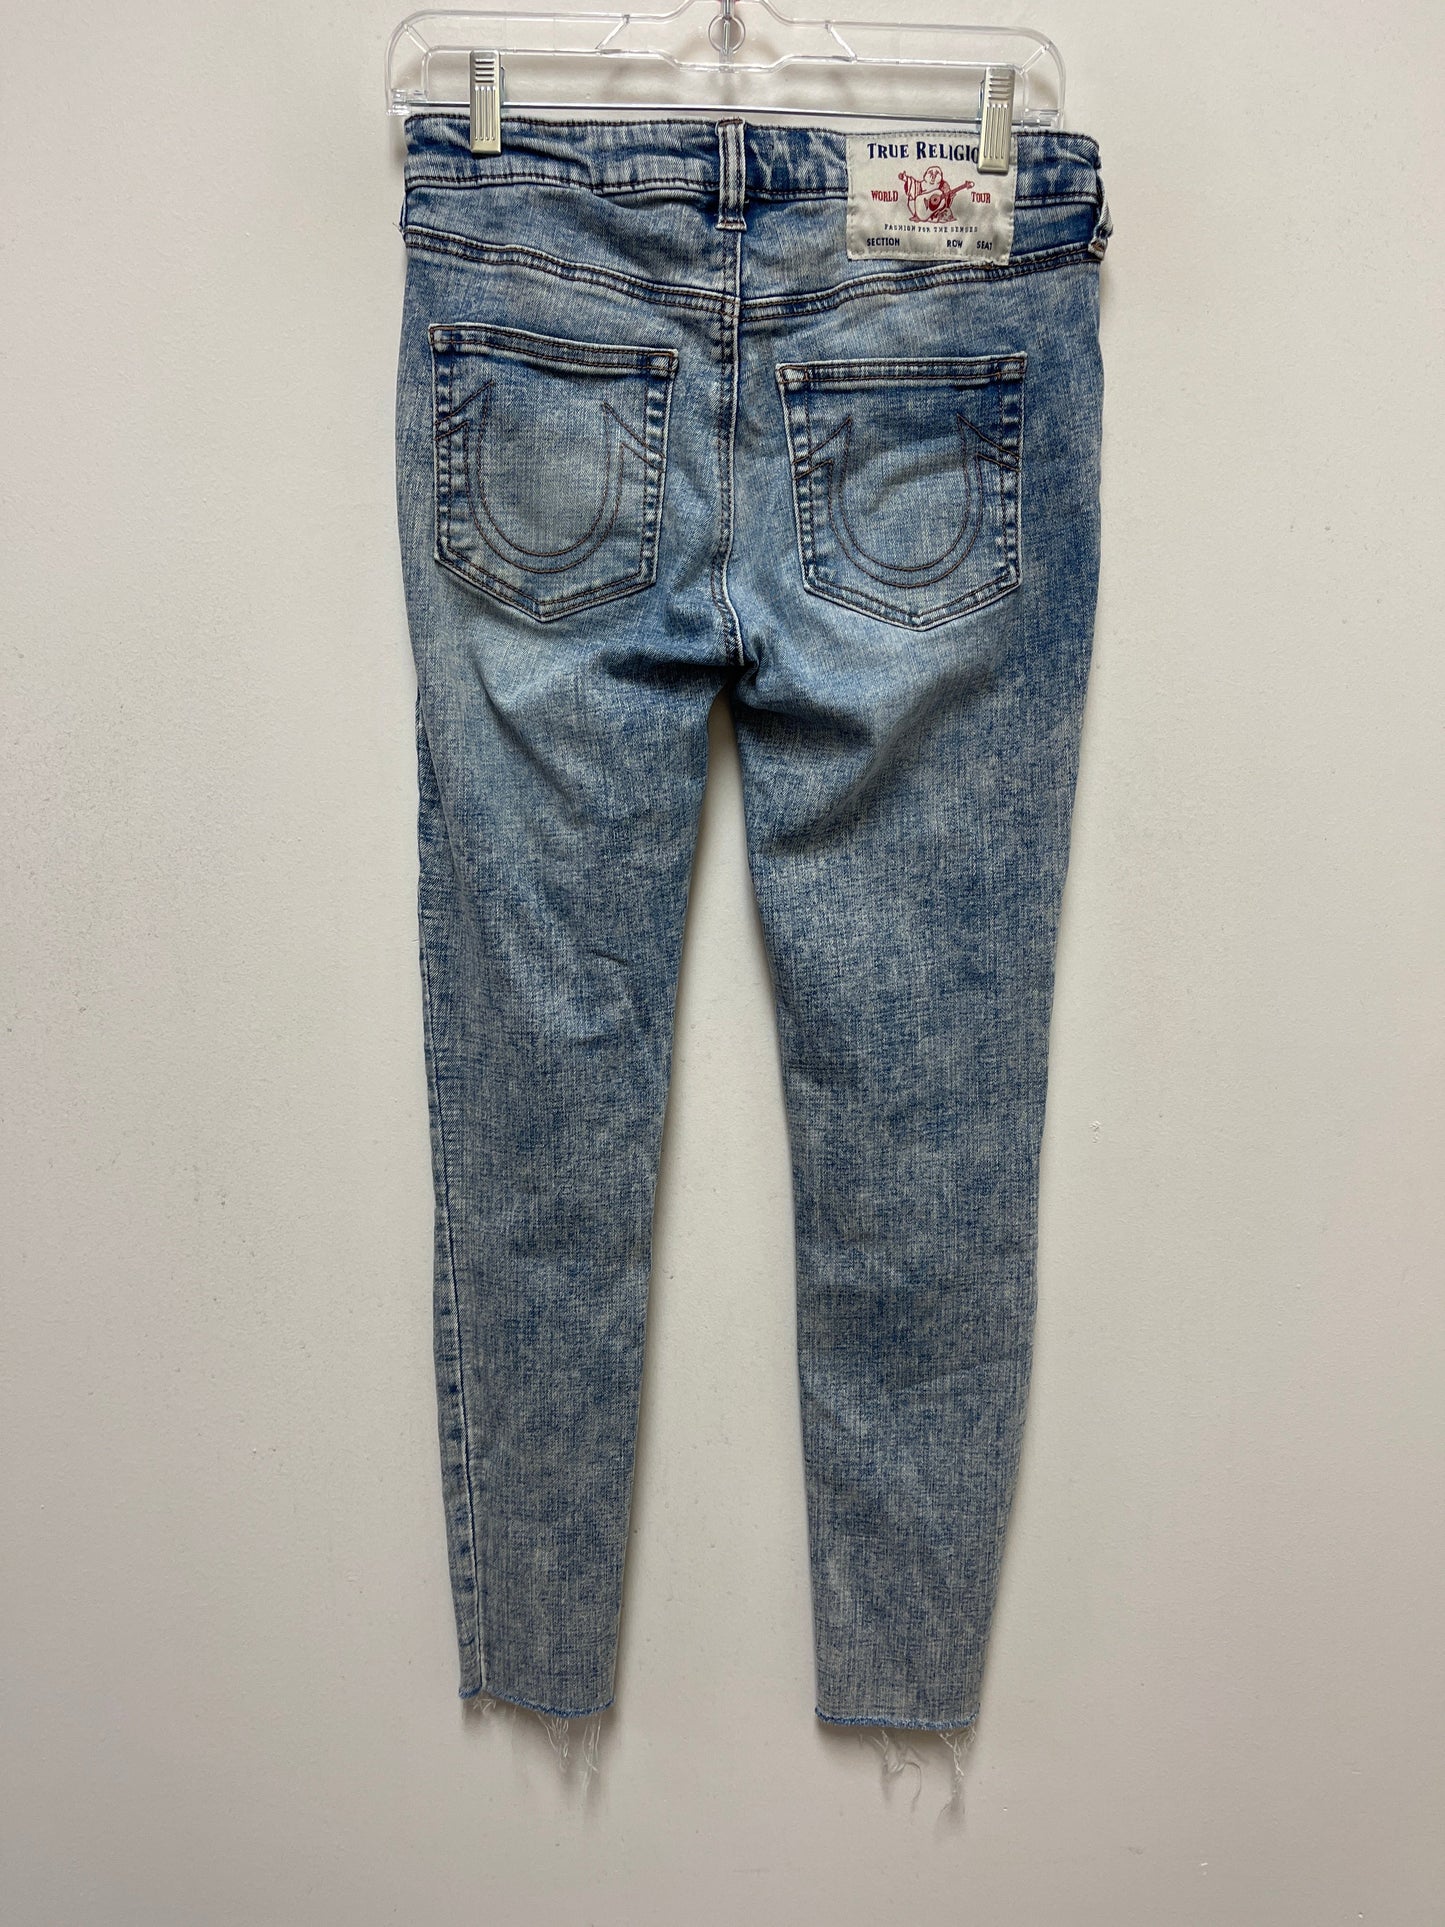 Blue Denim Jeans Designer True Religion, Size 6